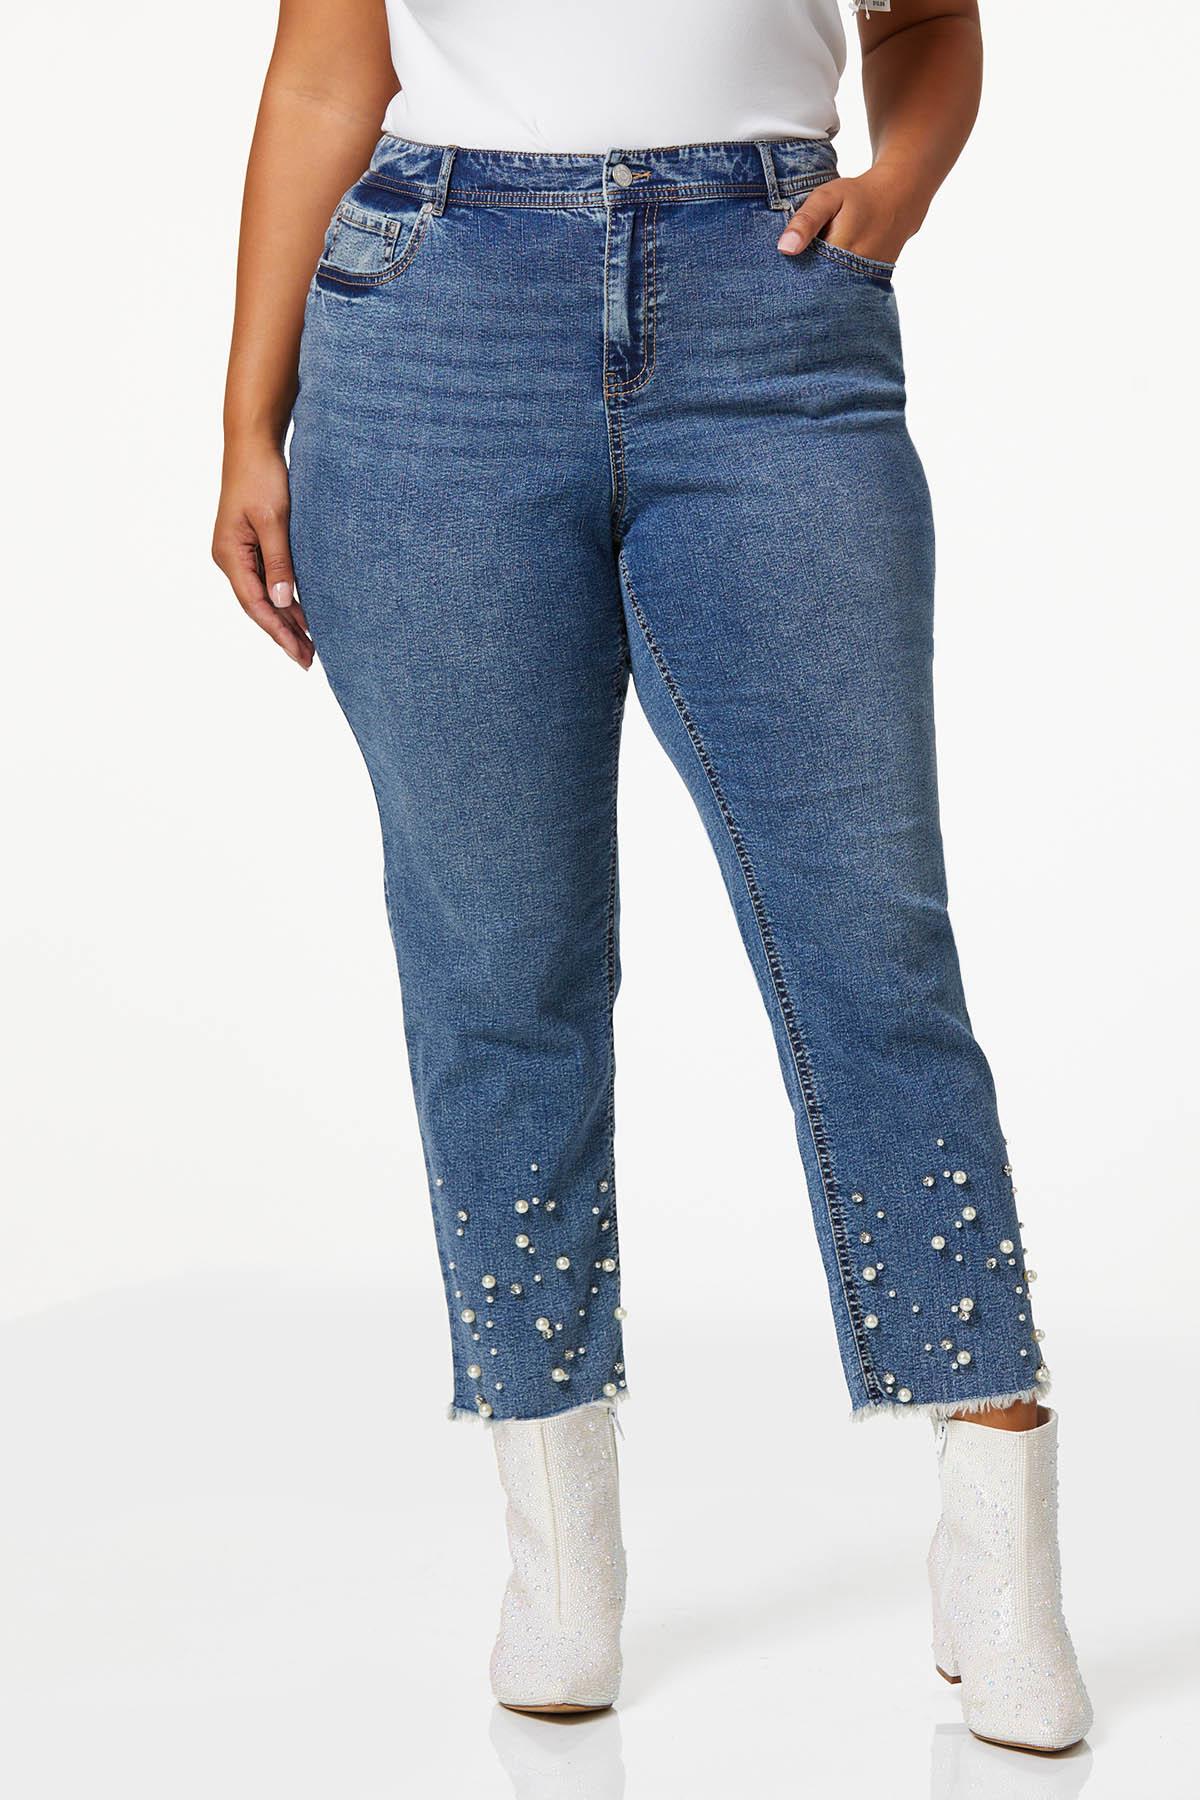 Cato Fashions  Cato Plus Size Frayed Pearl Rhinestone Jeans